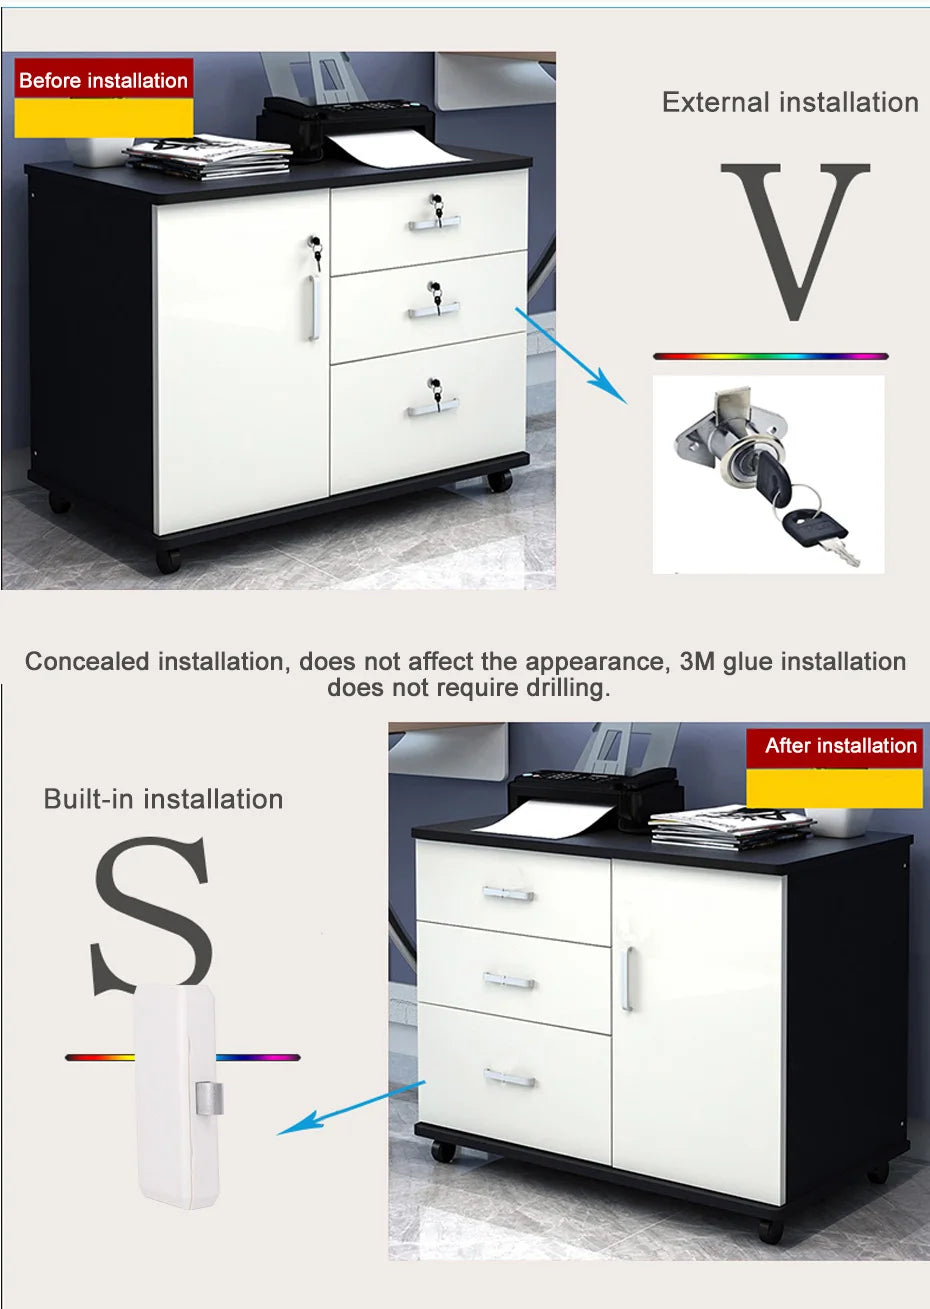 Smart Drawer / Cabinet Lock